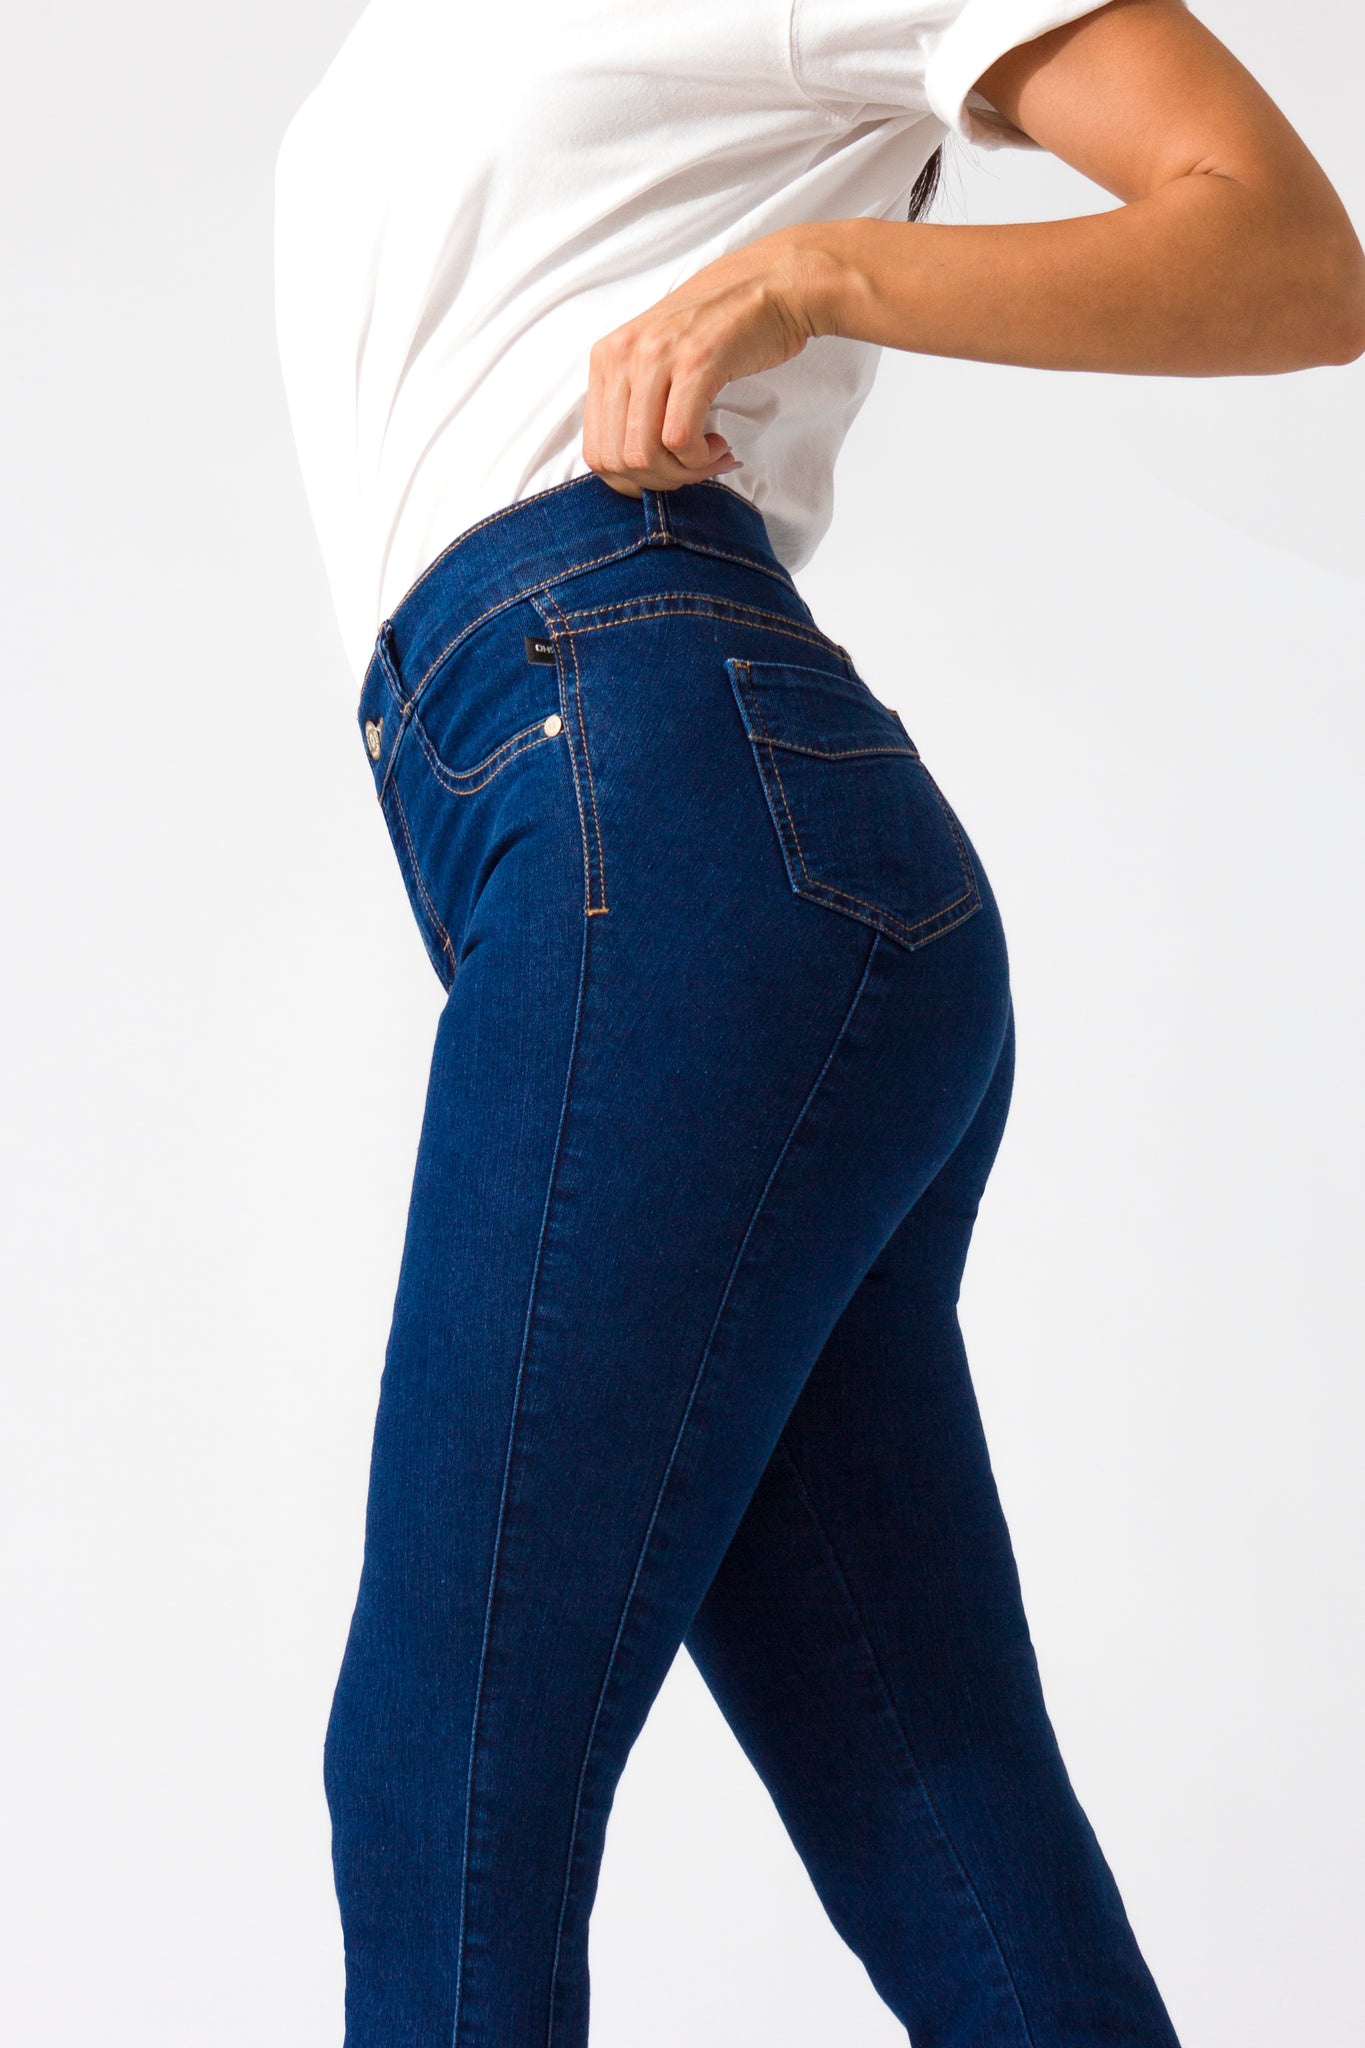 OHPOMP!® Basics, Cintura Media Skinny Jeans Azul Medio D1010